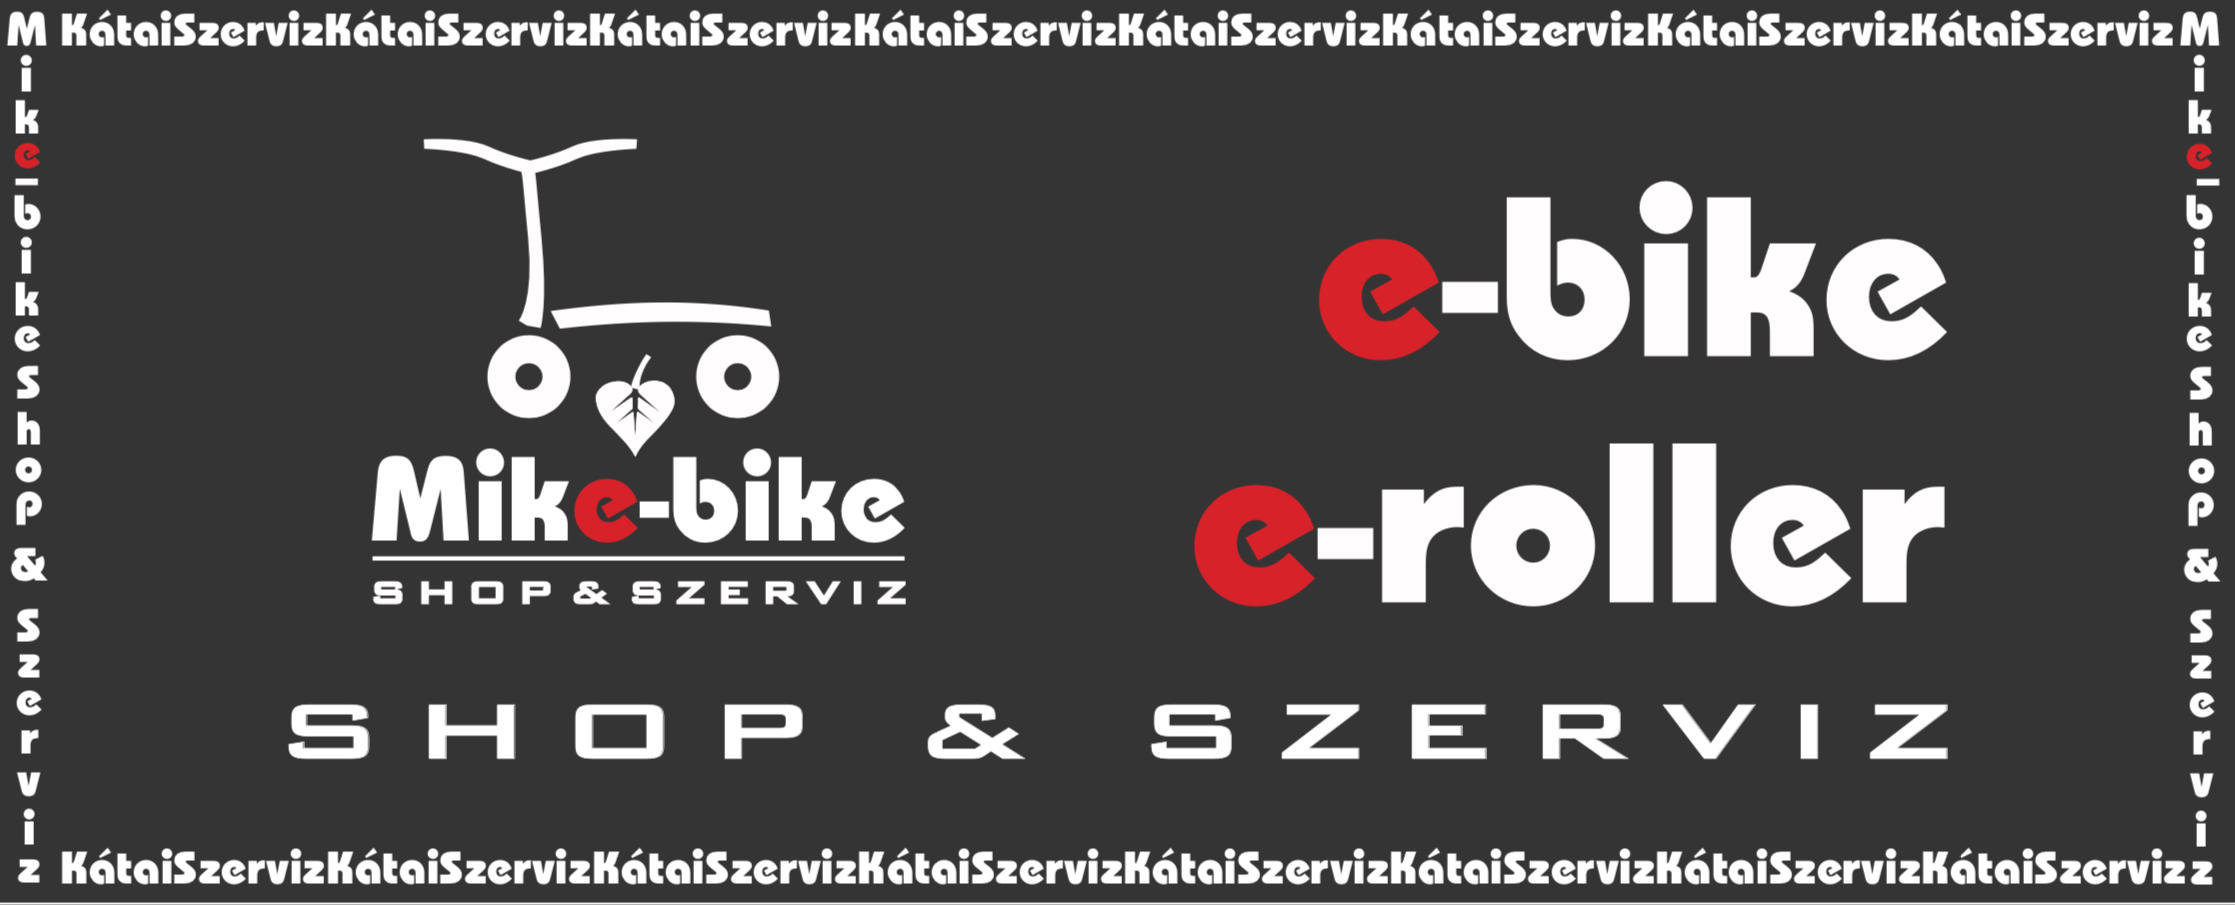 Images Mike-bike Shop & Szerviz E-roller E-bike